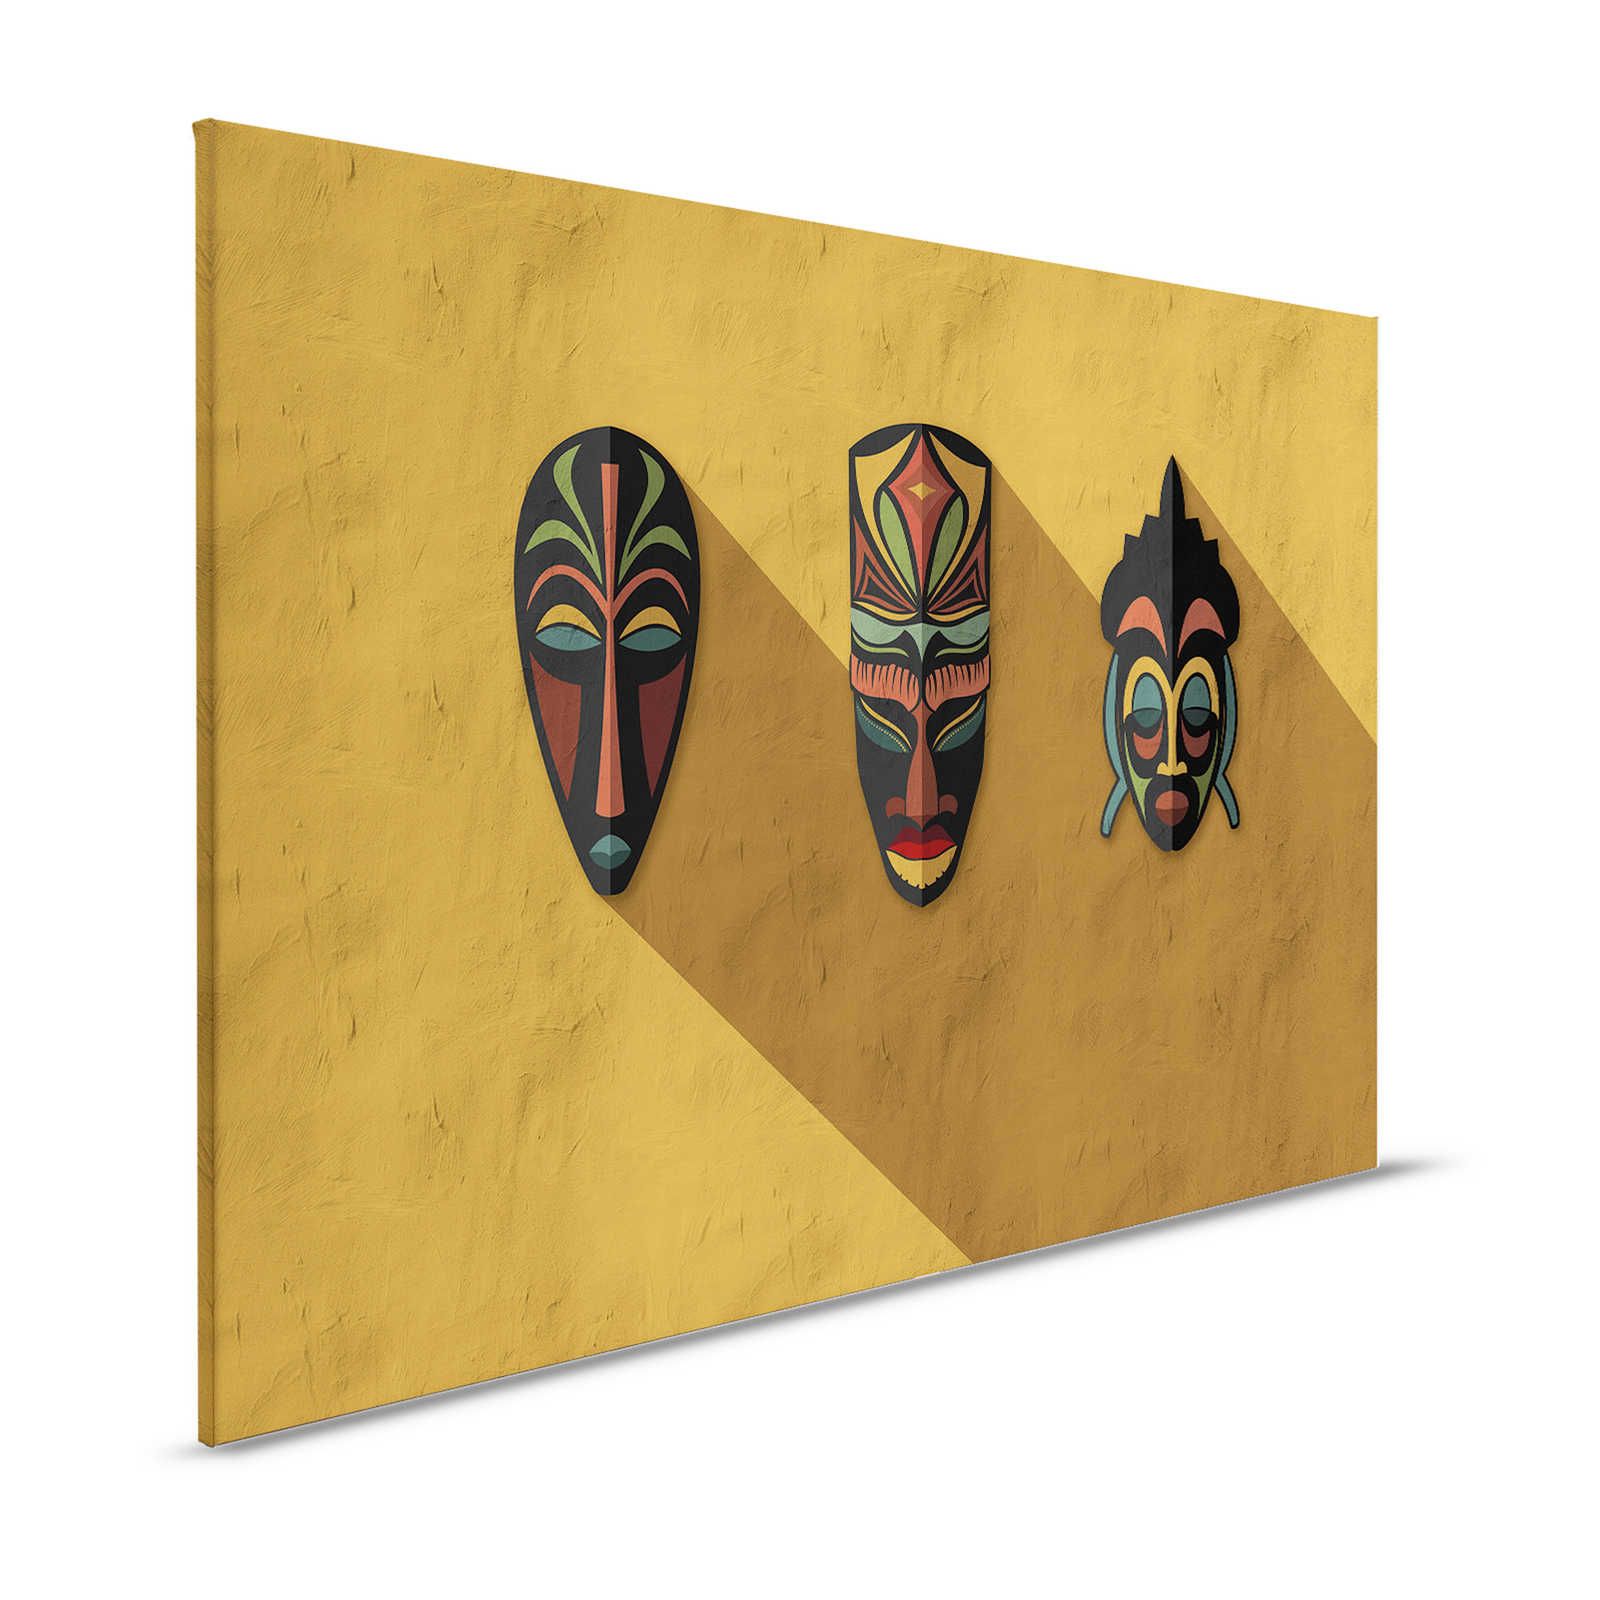 Zulú 1 - Lienzo Amarillo Mostaza, África Máscaras Diseño Zulú - 1,20 m x 0,80 m
